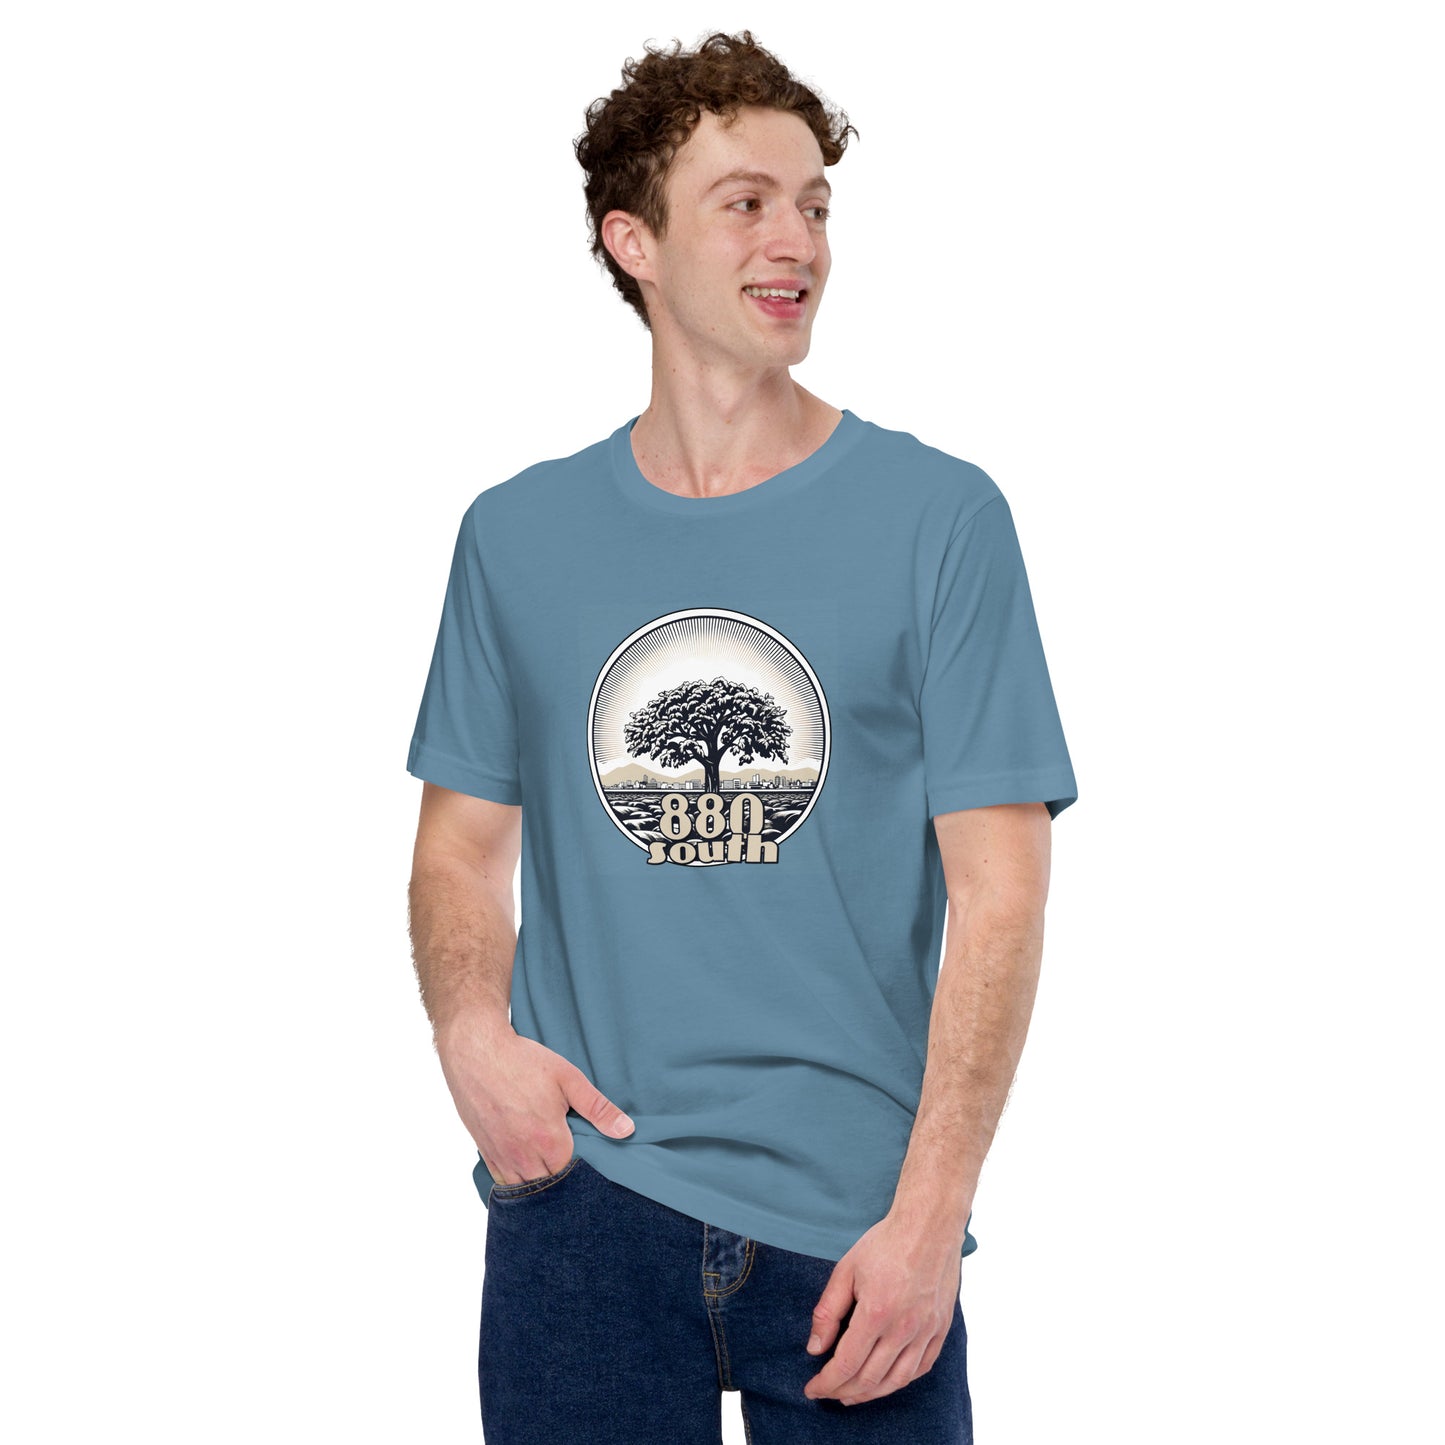 880 South Orchard City - Unisex t-shirt